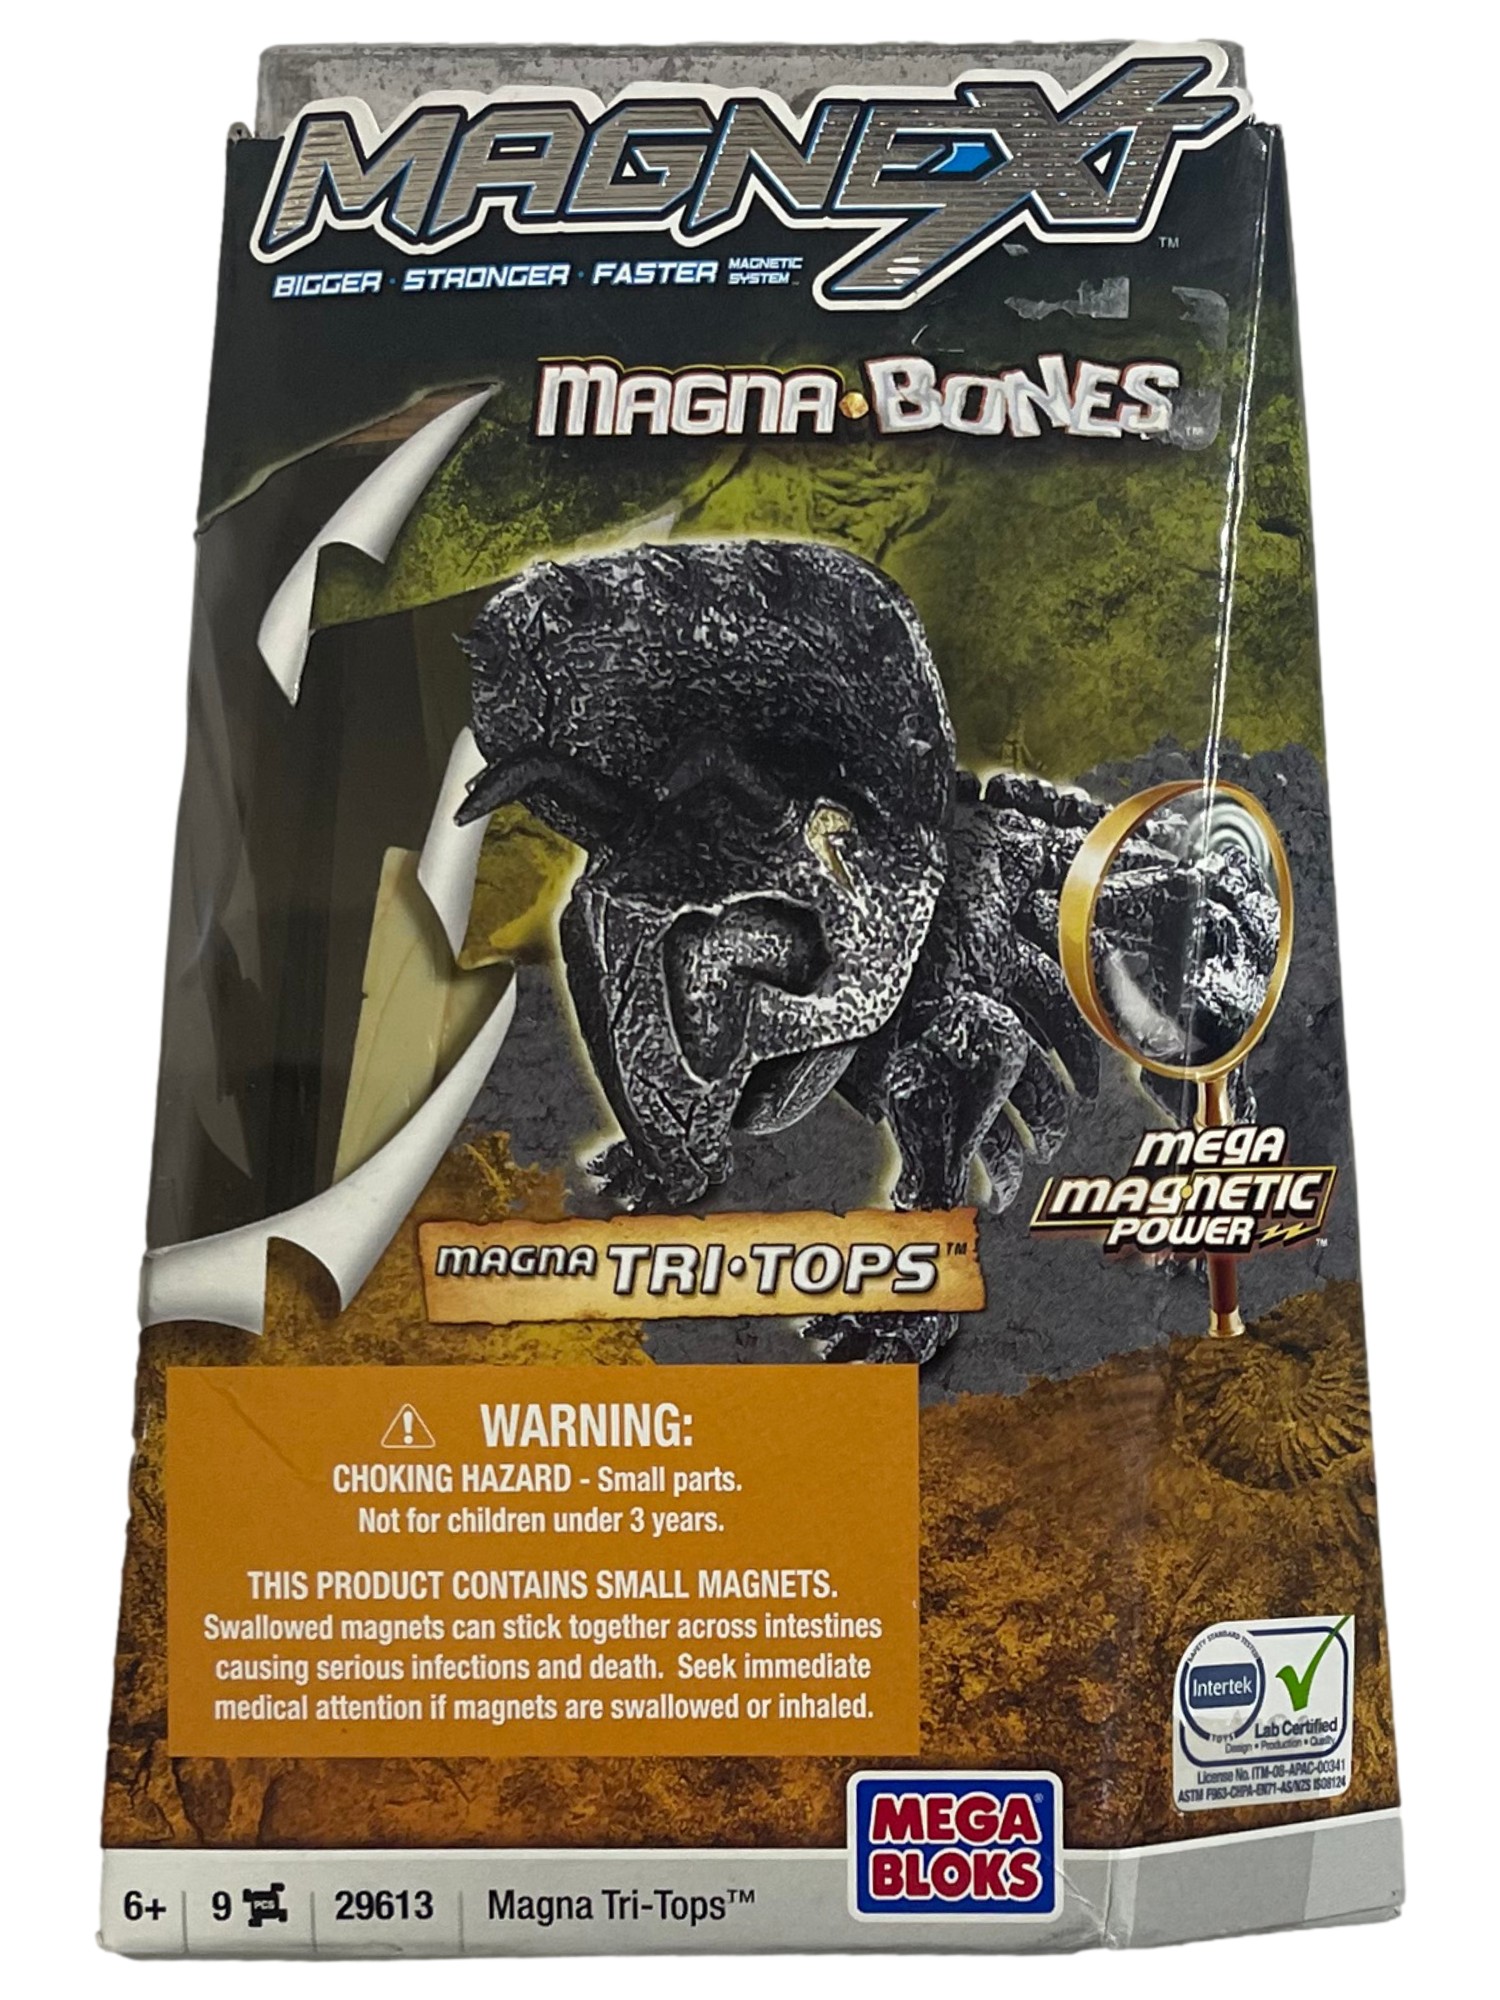 Magnext Mega Bloks Magnext Triceratops Magna Bones Tri-tops in Crate Set 29613